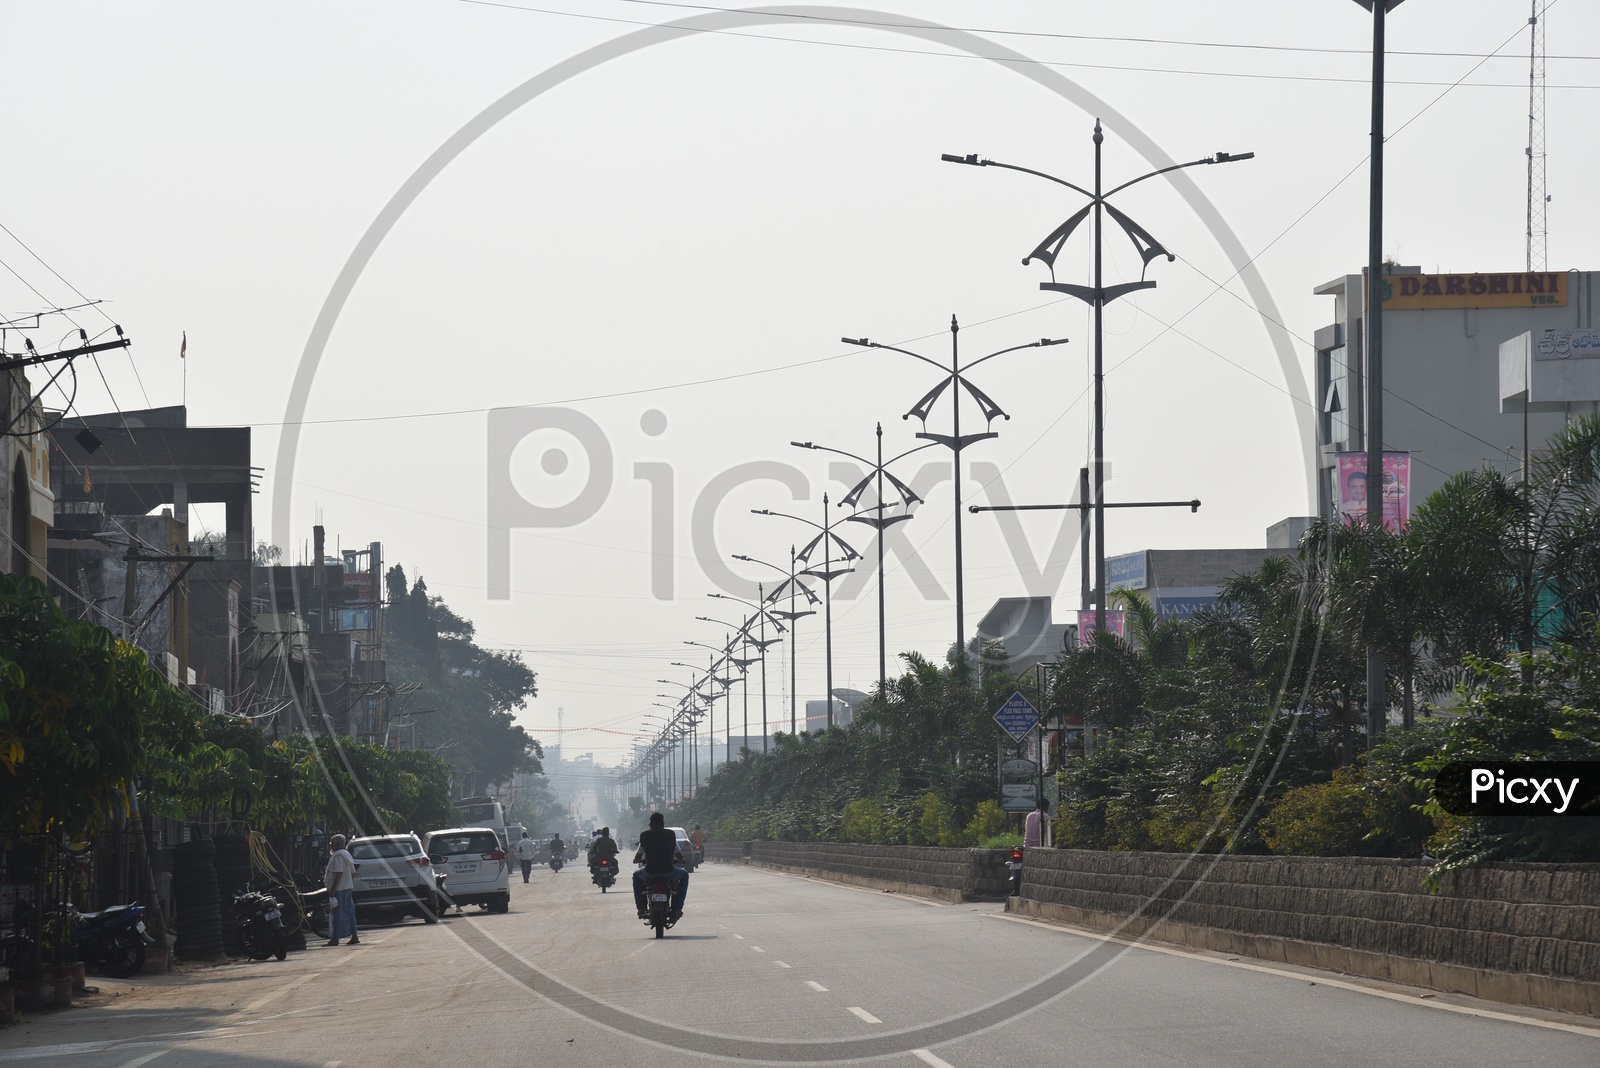 Gajwel-Pregnapur Intertown road infrastructure